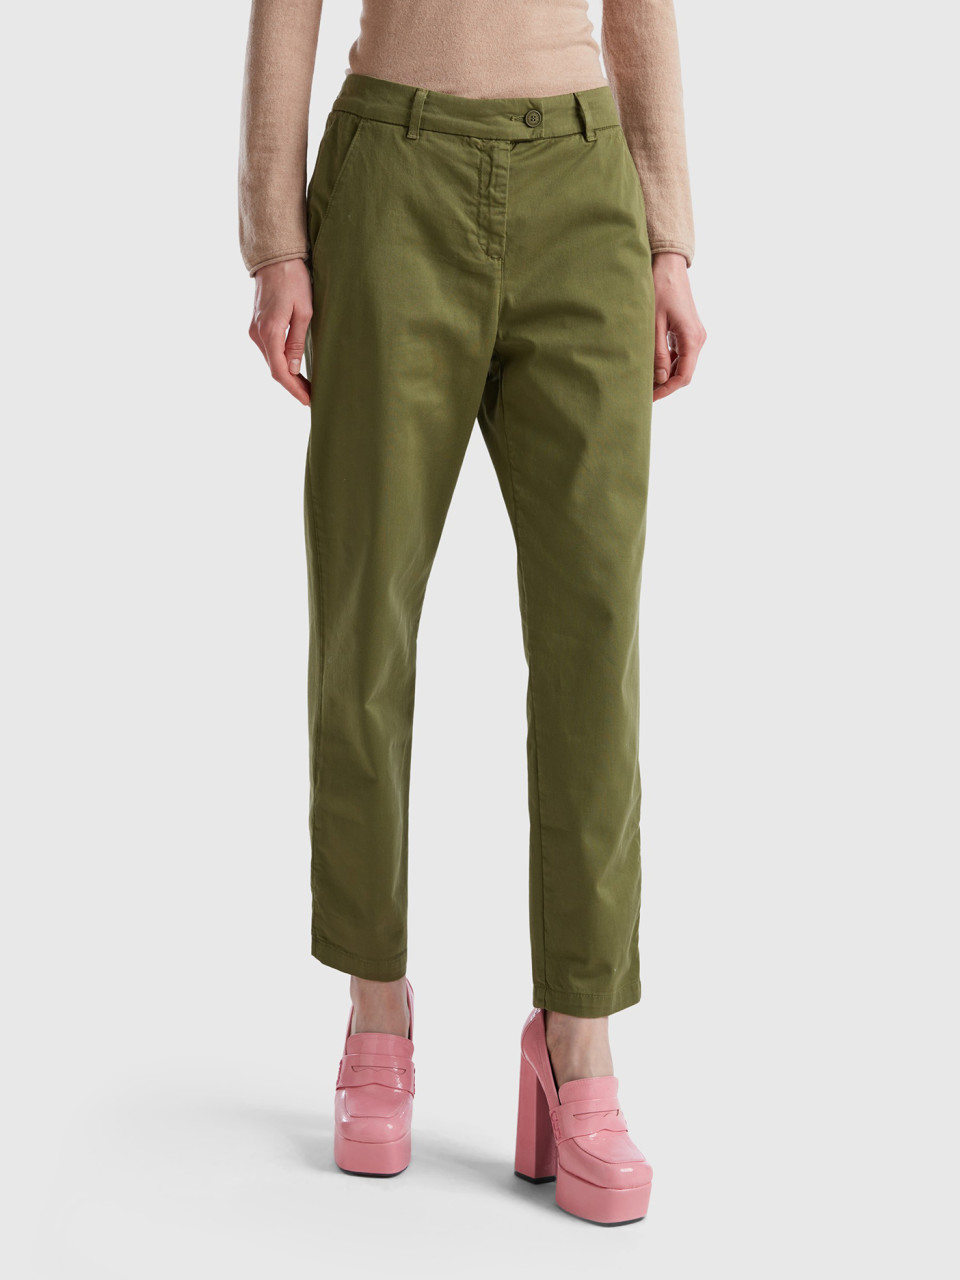 Benetton, Stretch Cotton Chino Trousers, Military Green, Women